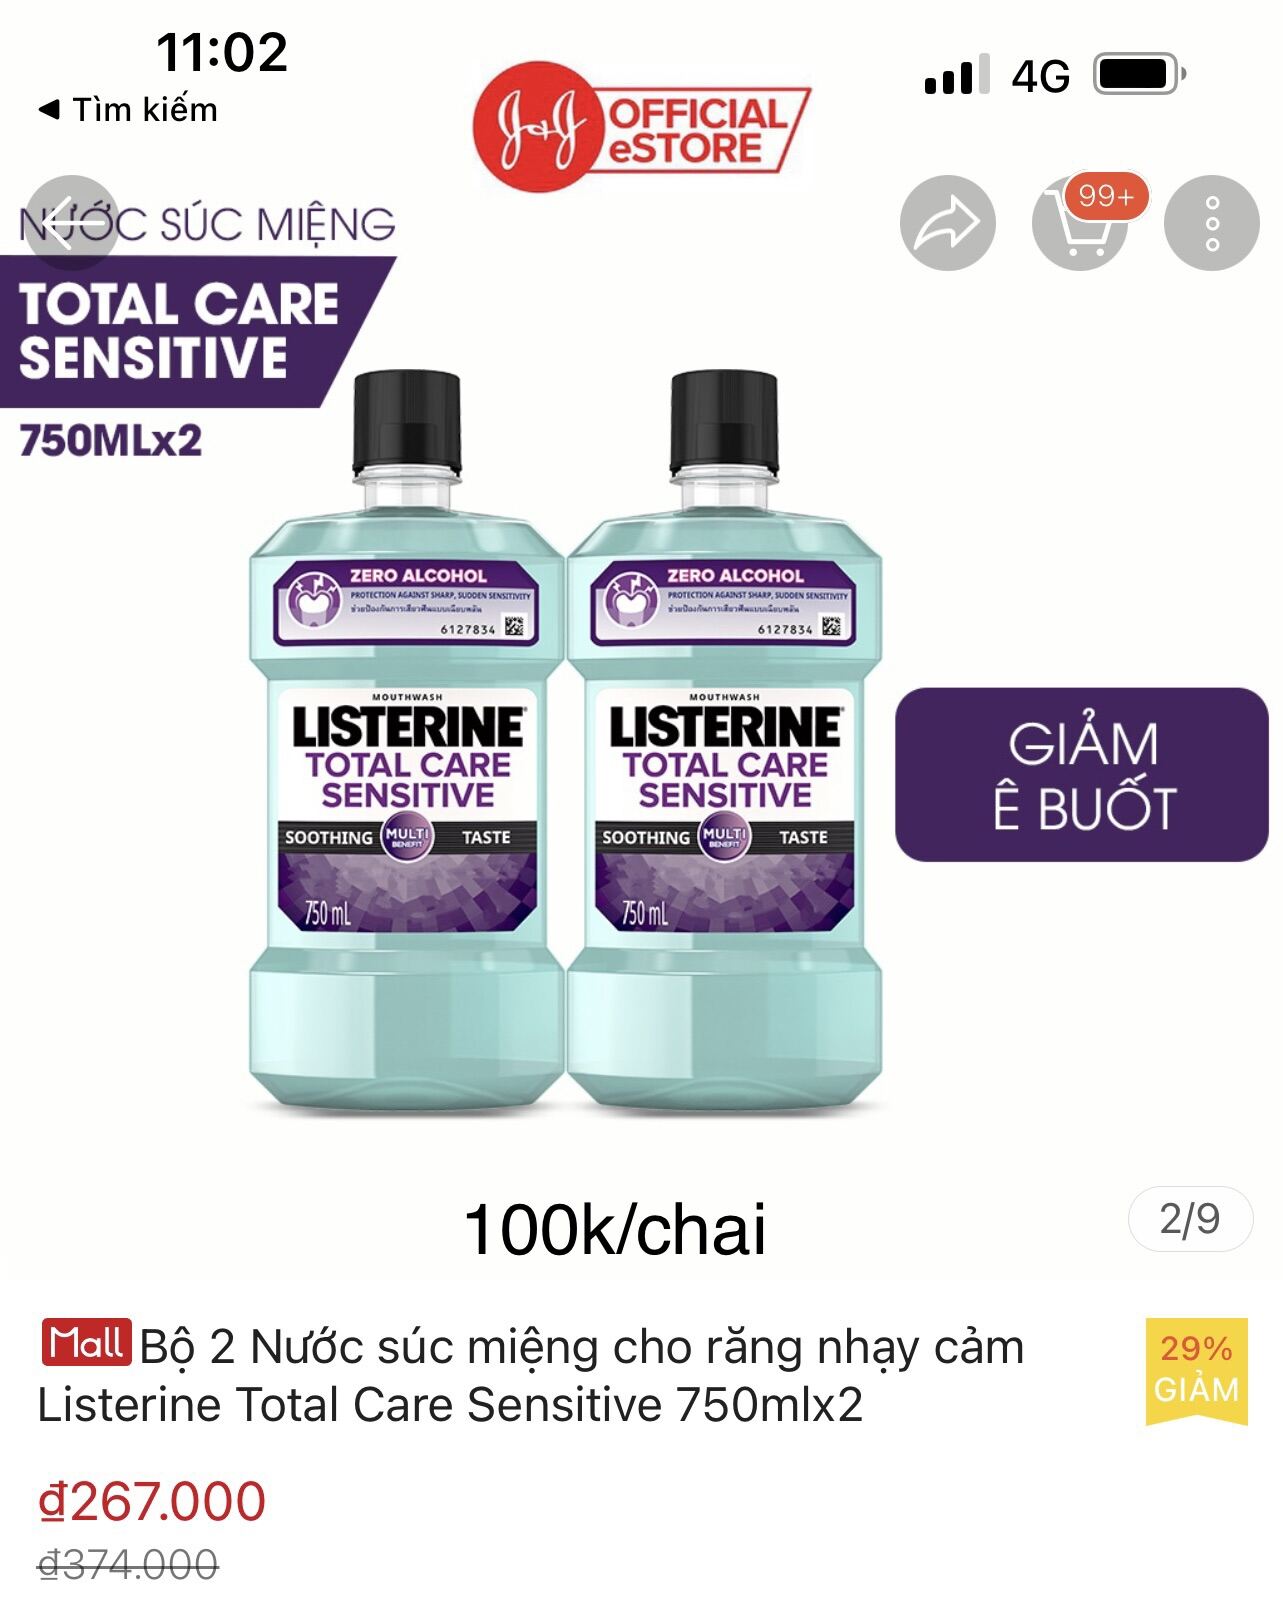 Nu c súc miêng cho r ng hay cam Listerine Total Care Sensitive 750ml